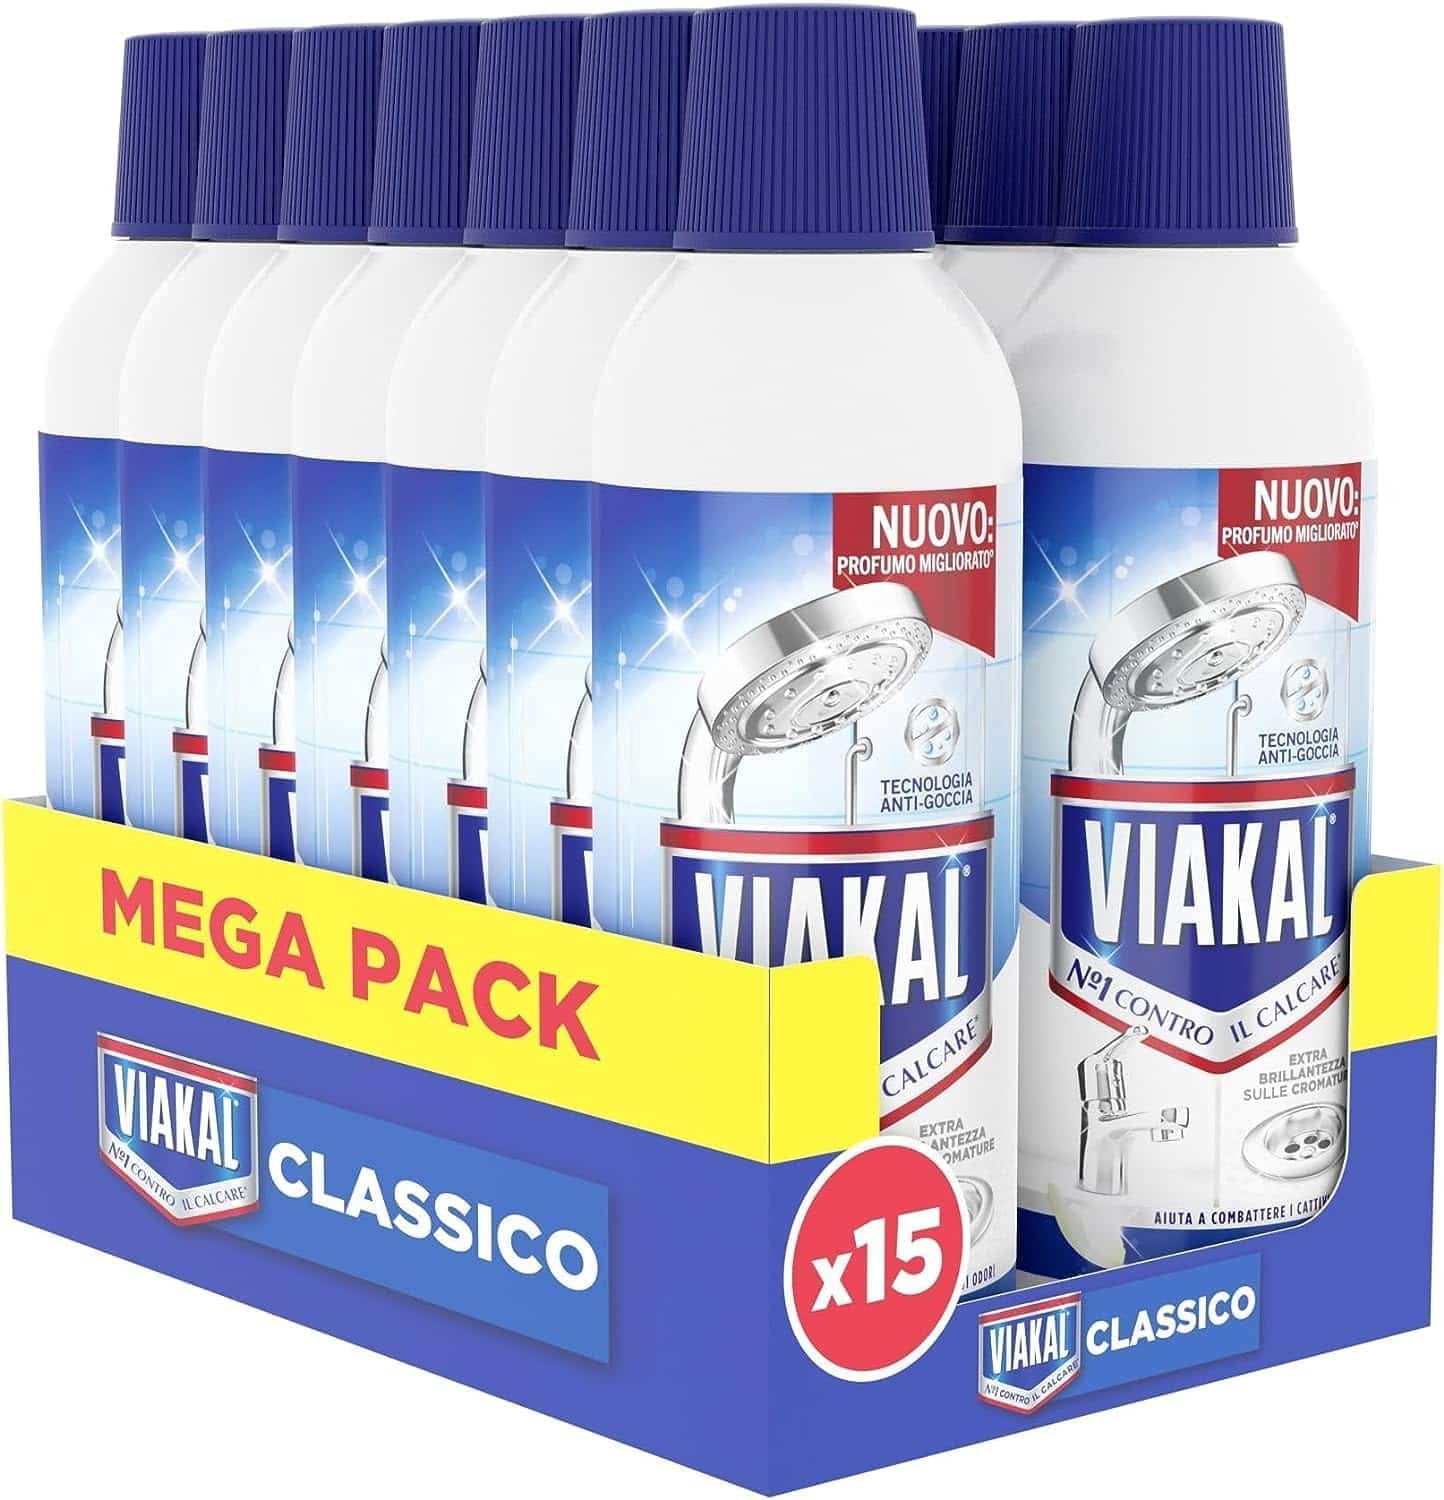 Mega Pack Viakal Classico Gel Anticalcare Confezione da 15 x 470 ml Regolare.